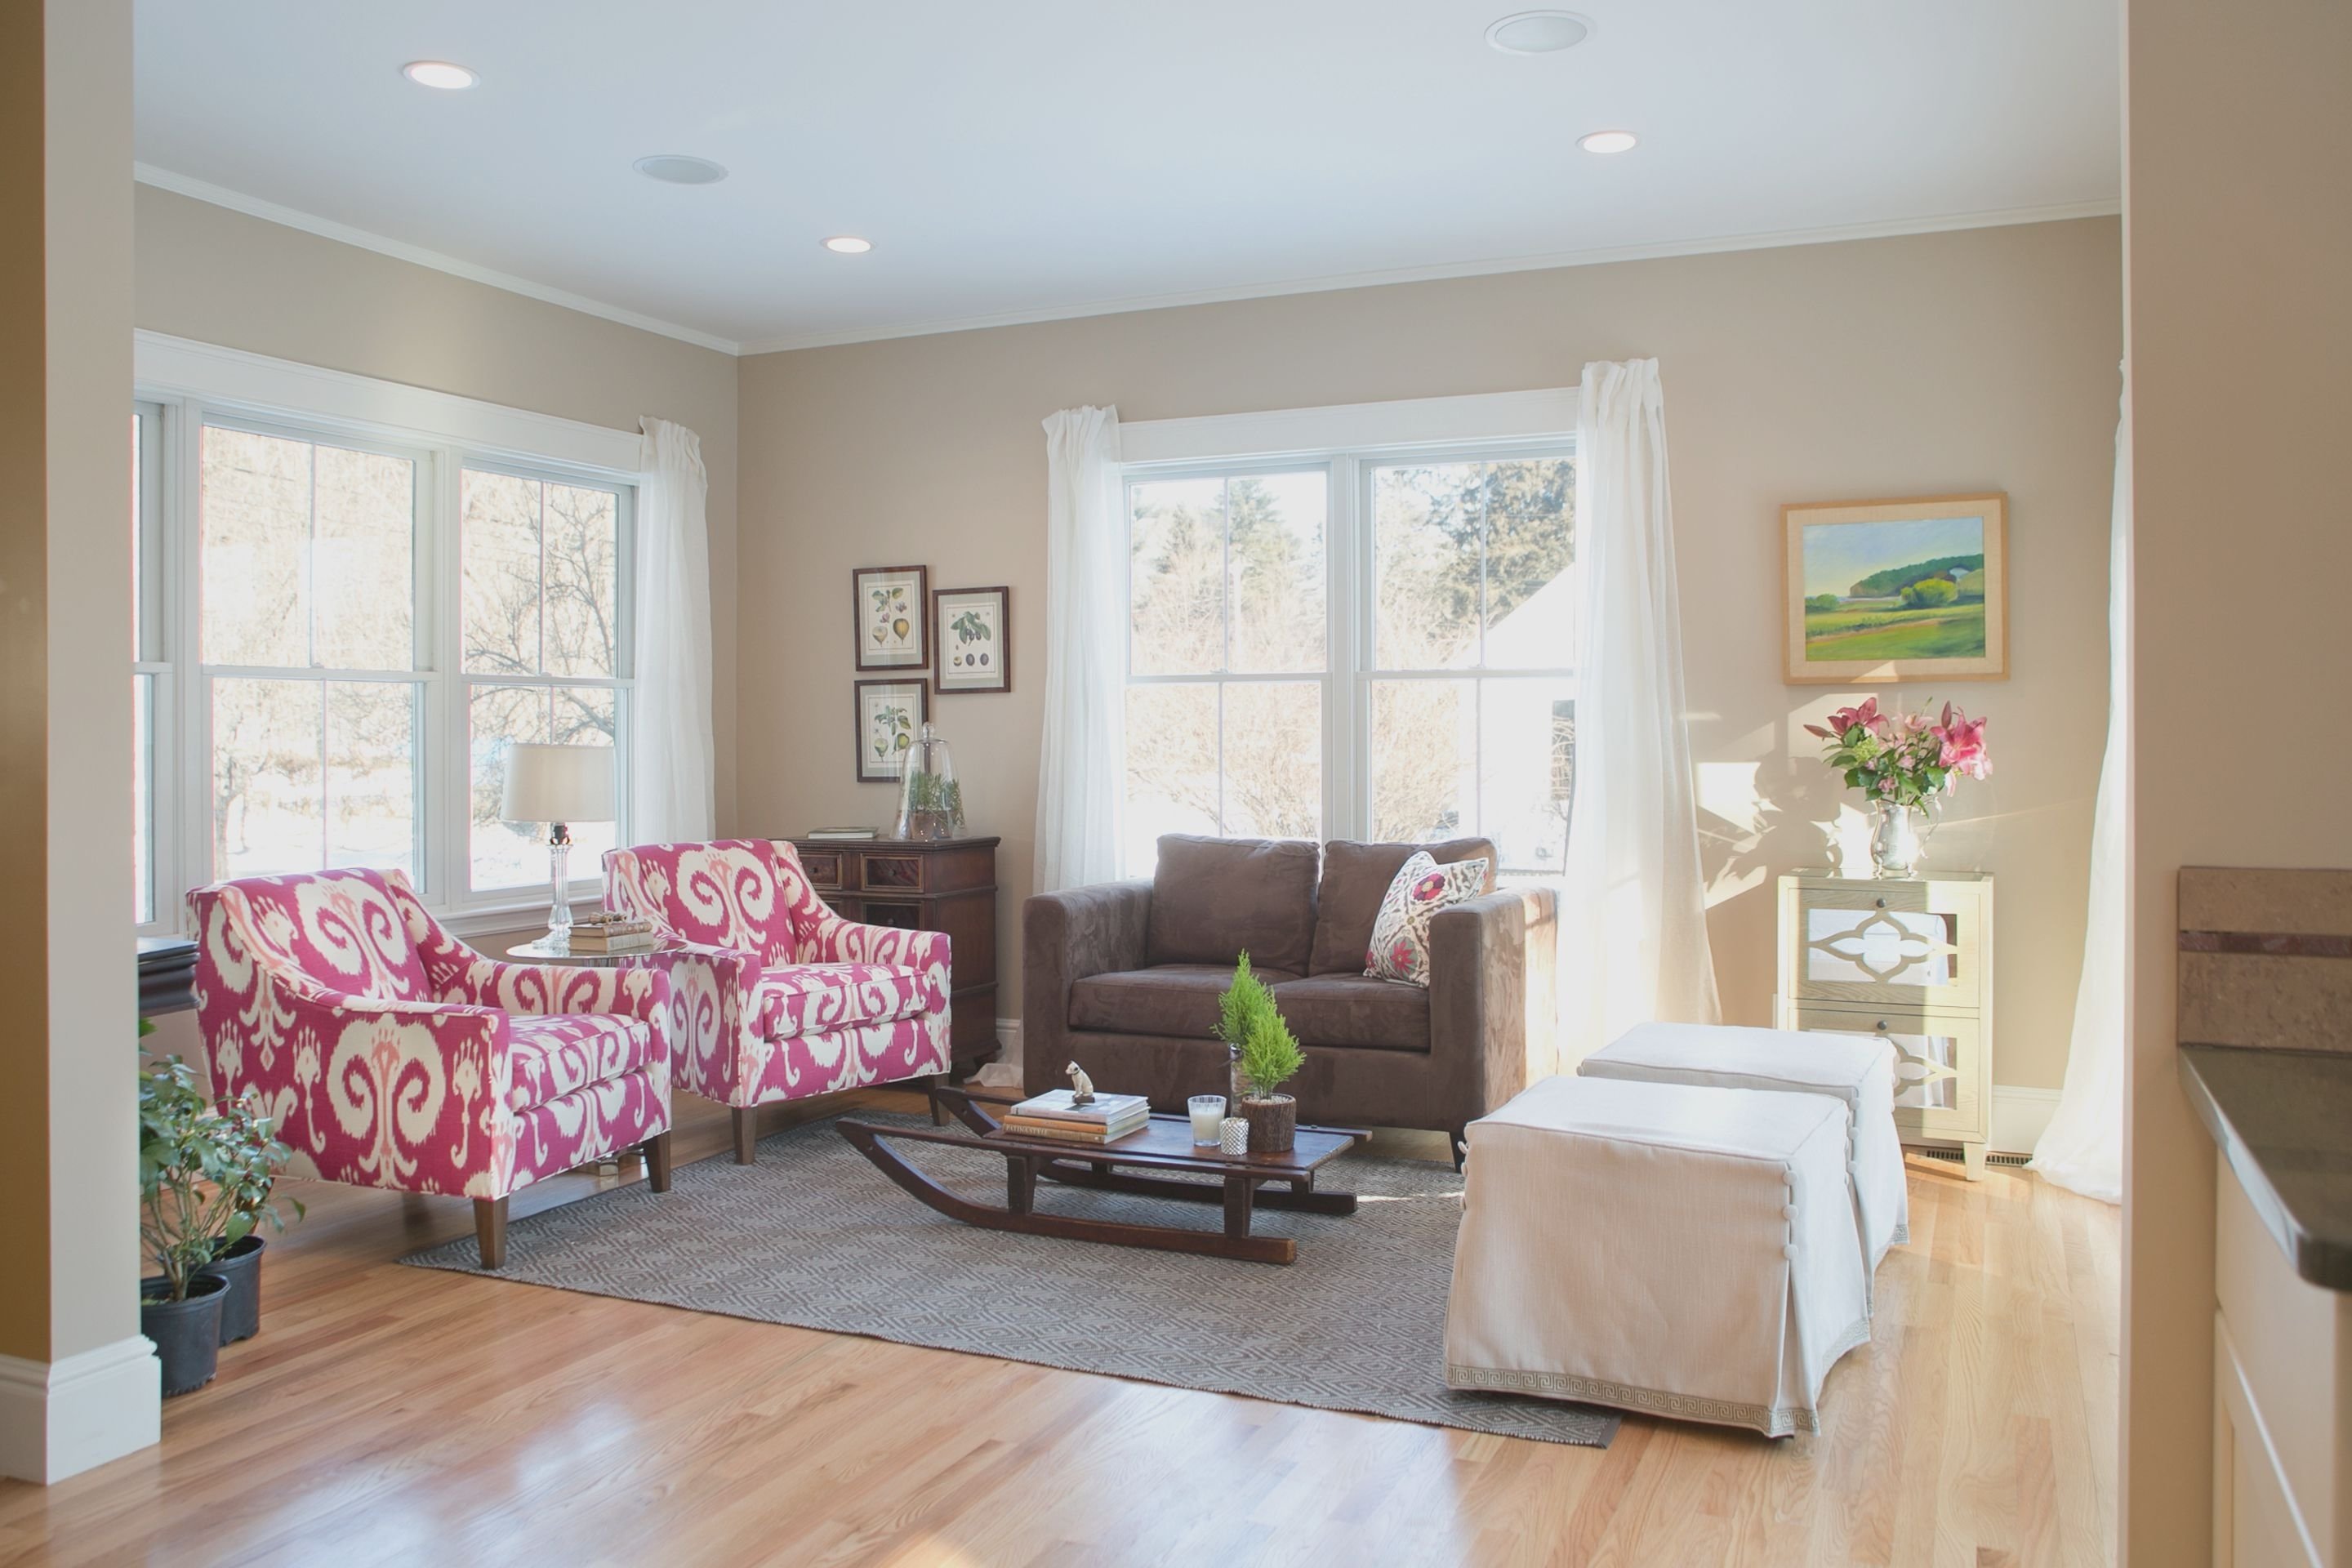 10 Elegant Living Room Color Ideas For Small Spaces living room paint ideas for small spaces gj home design 2022